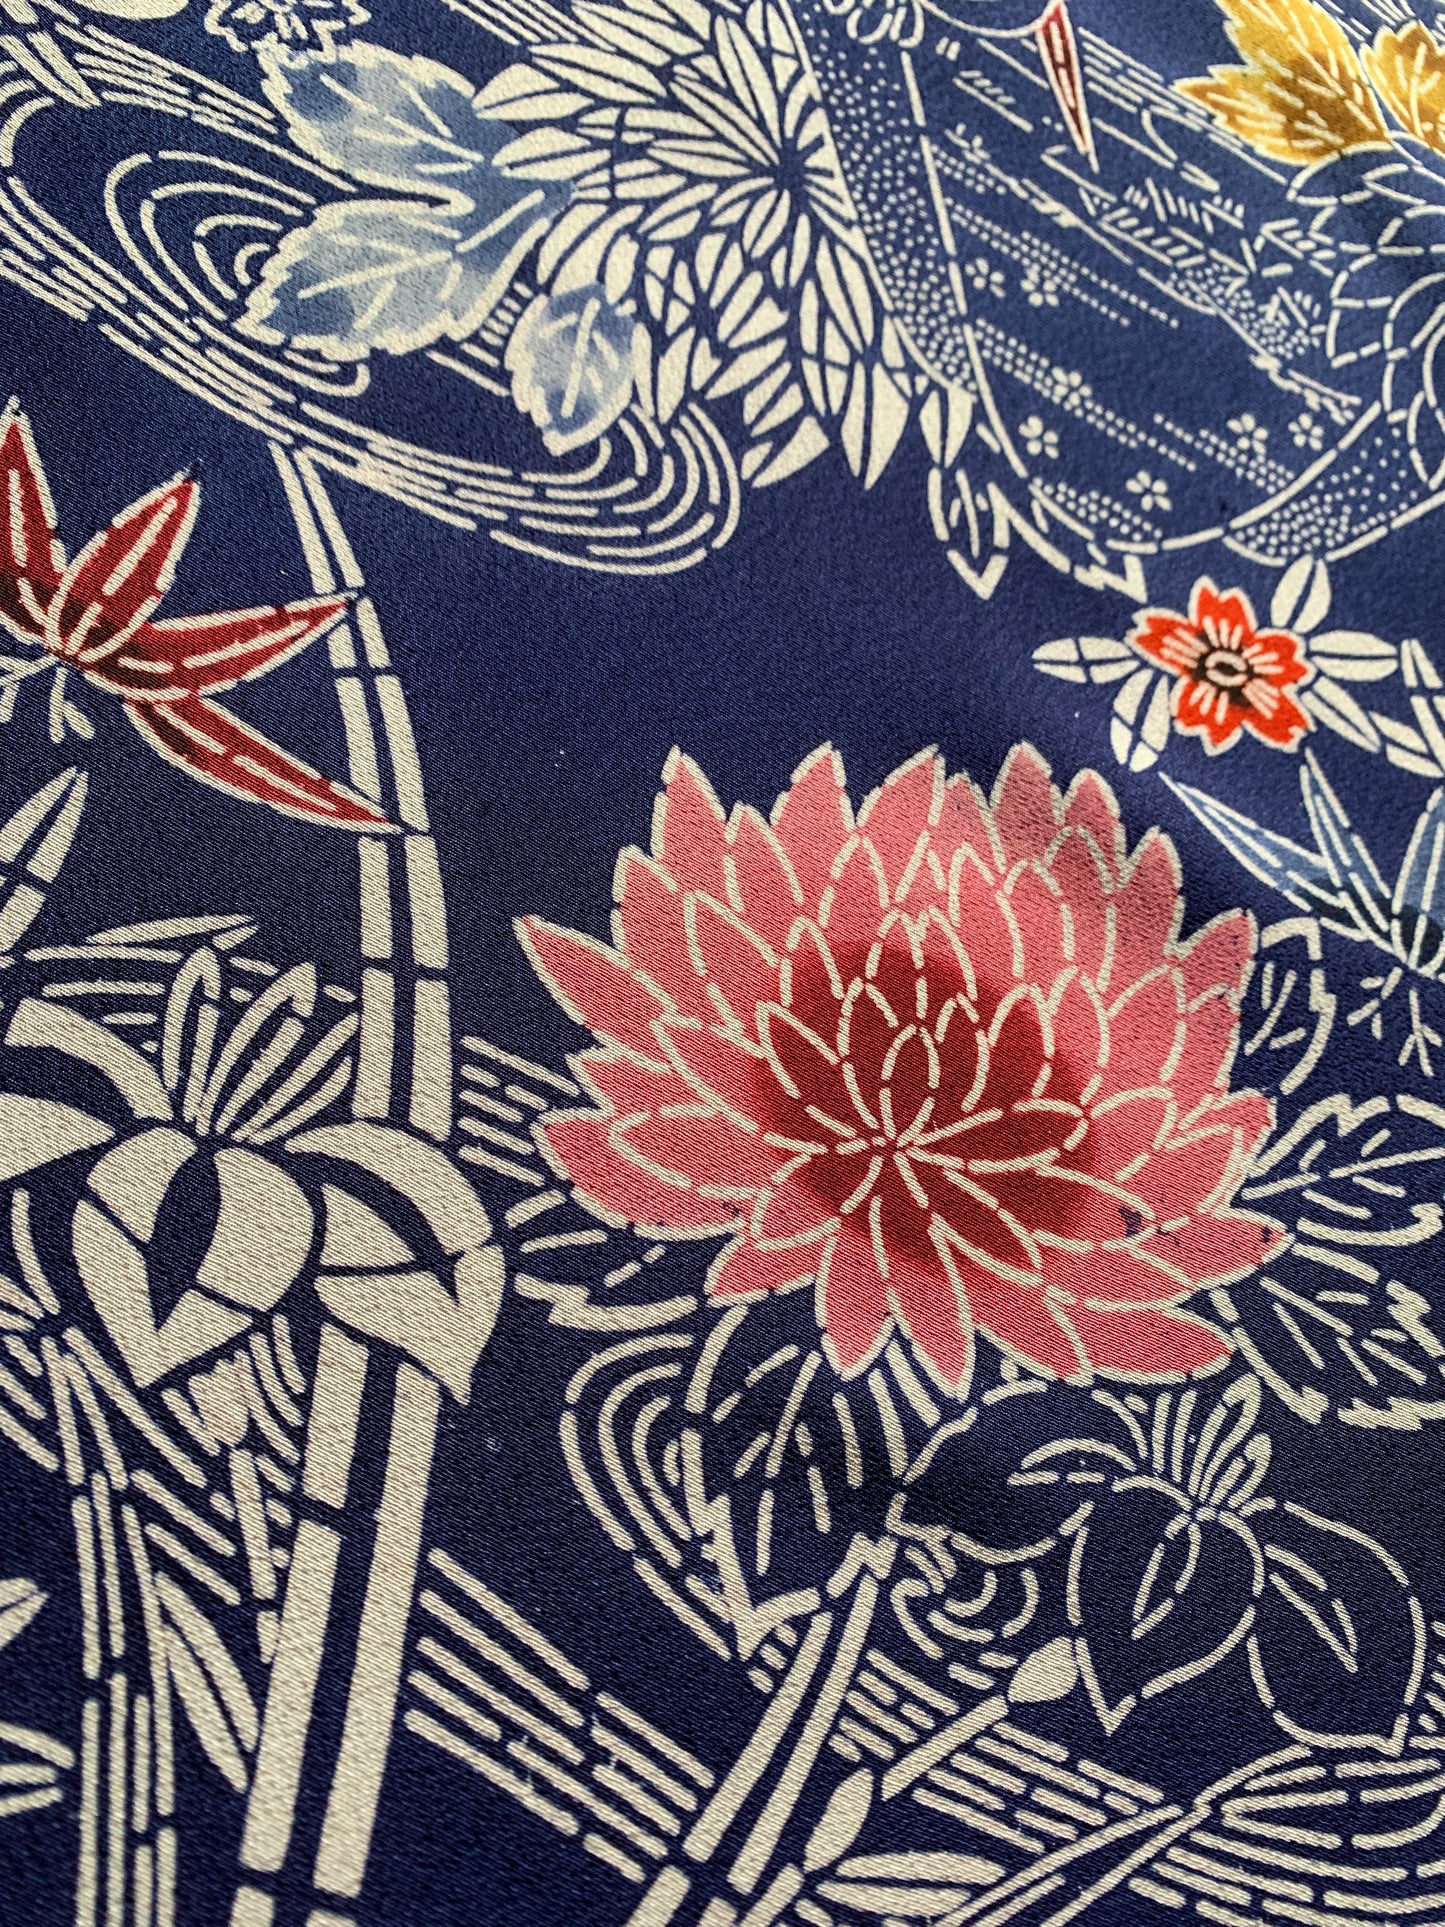 Kimono fabric for custom dress order, fabric #84